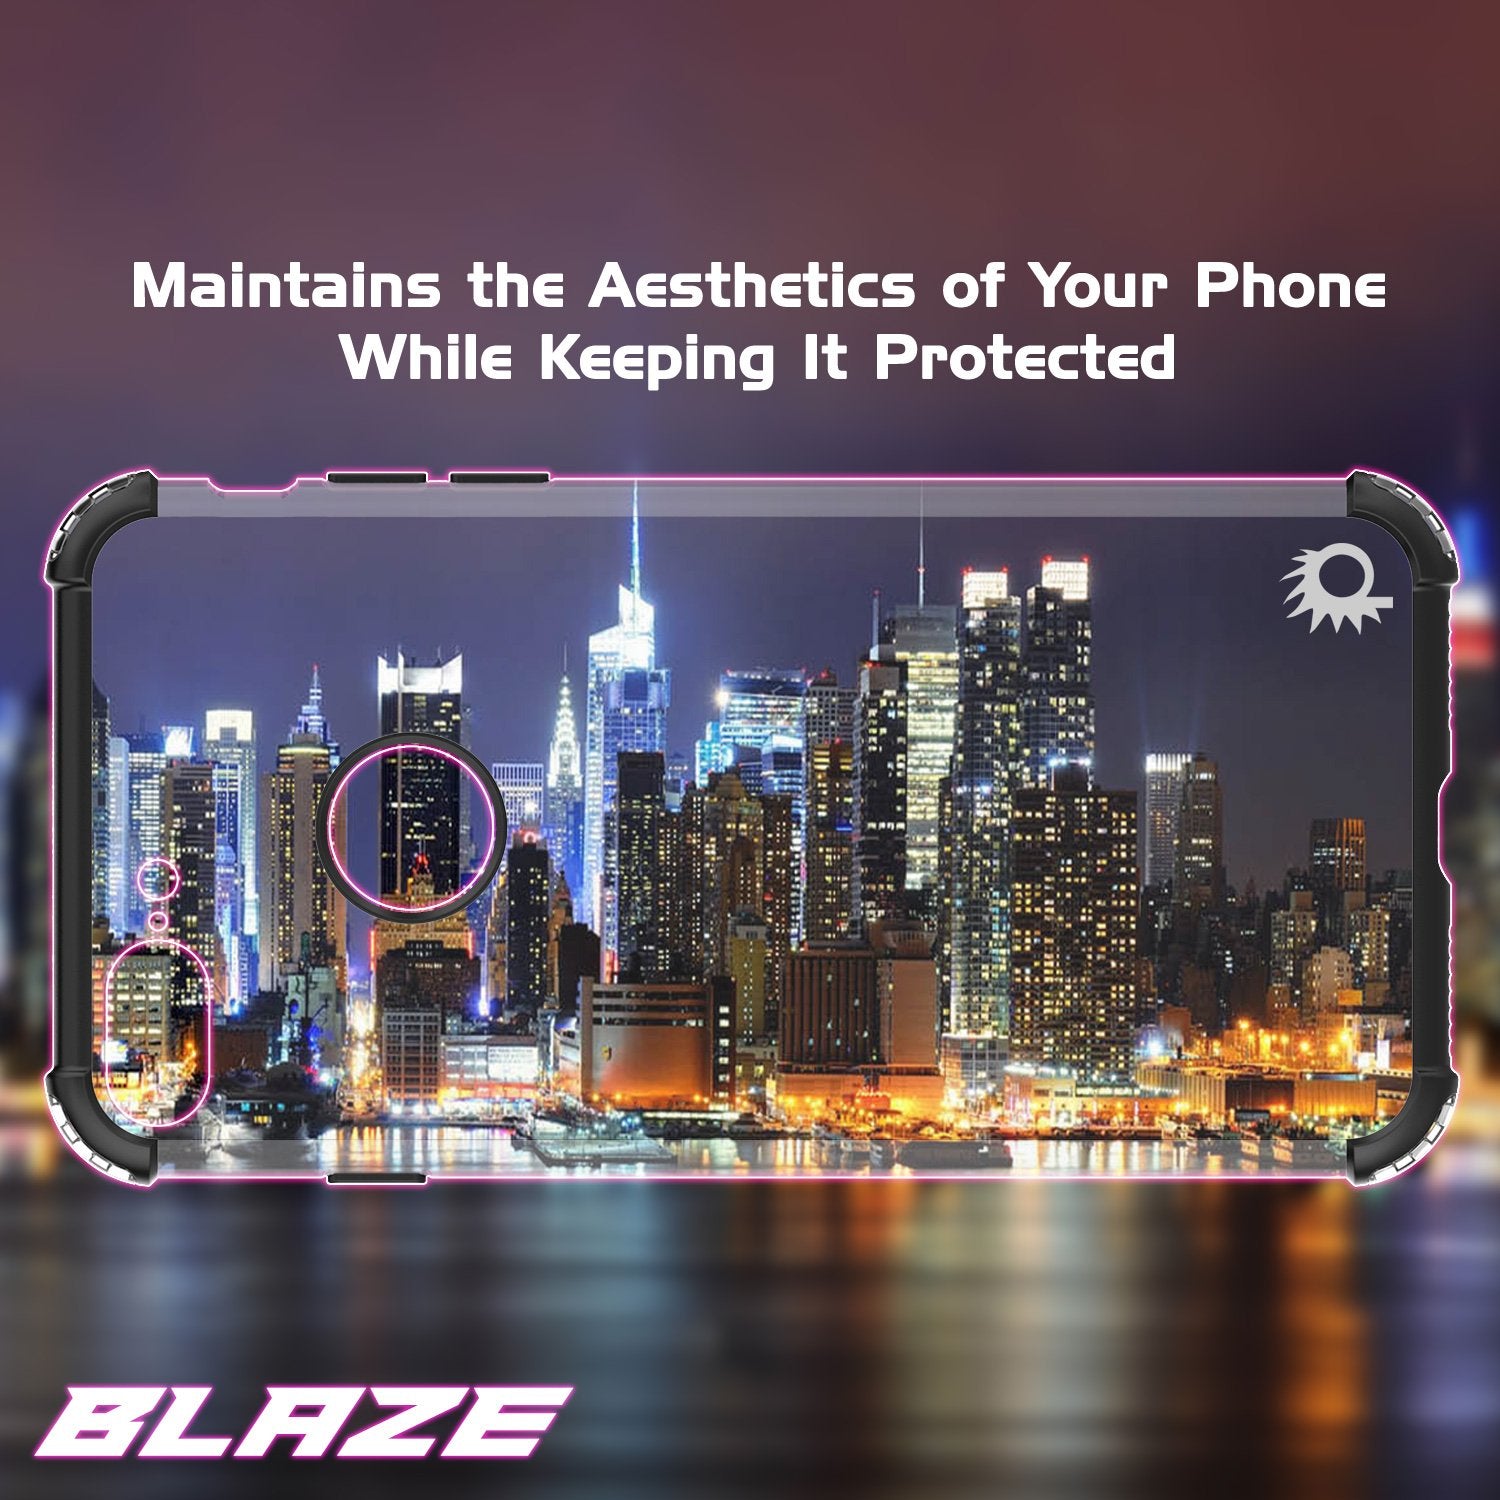 iPhone 7 PLUS Case, Punkcase [BLAZE Black SERIES] Protective Cover W/ PunkShield Screen Protector